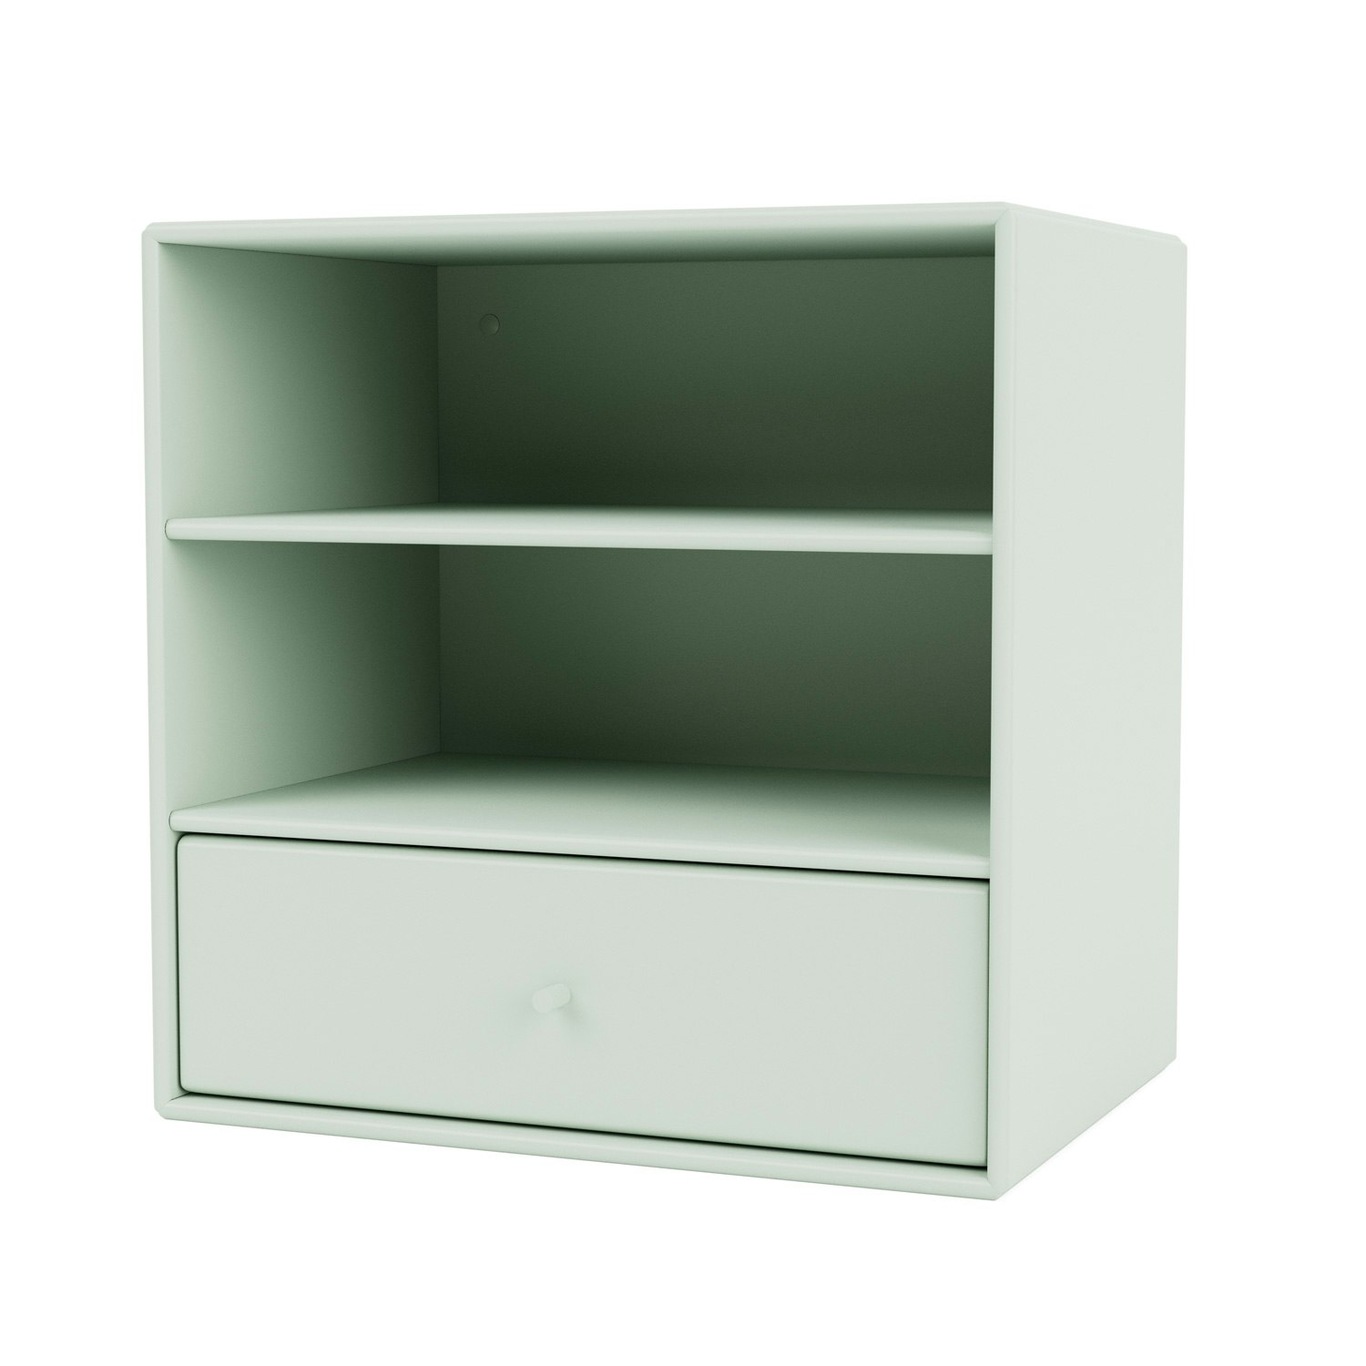 Mini 1005 Shelf With One Drawer, Mist Green